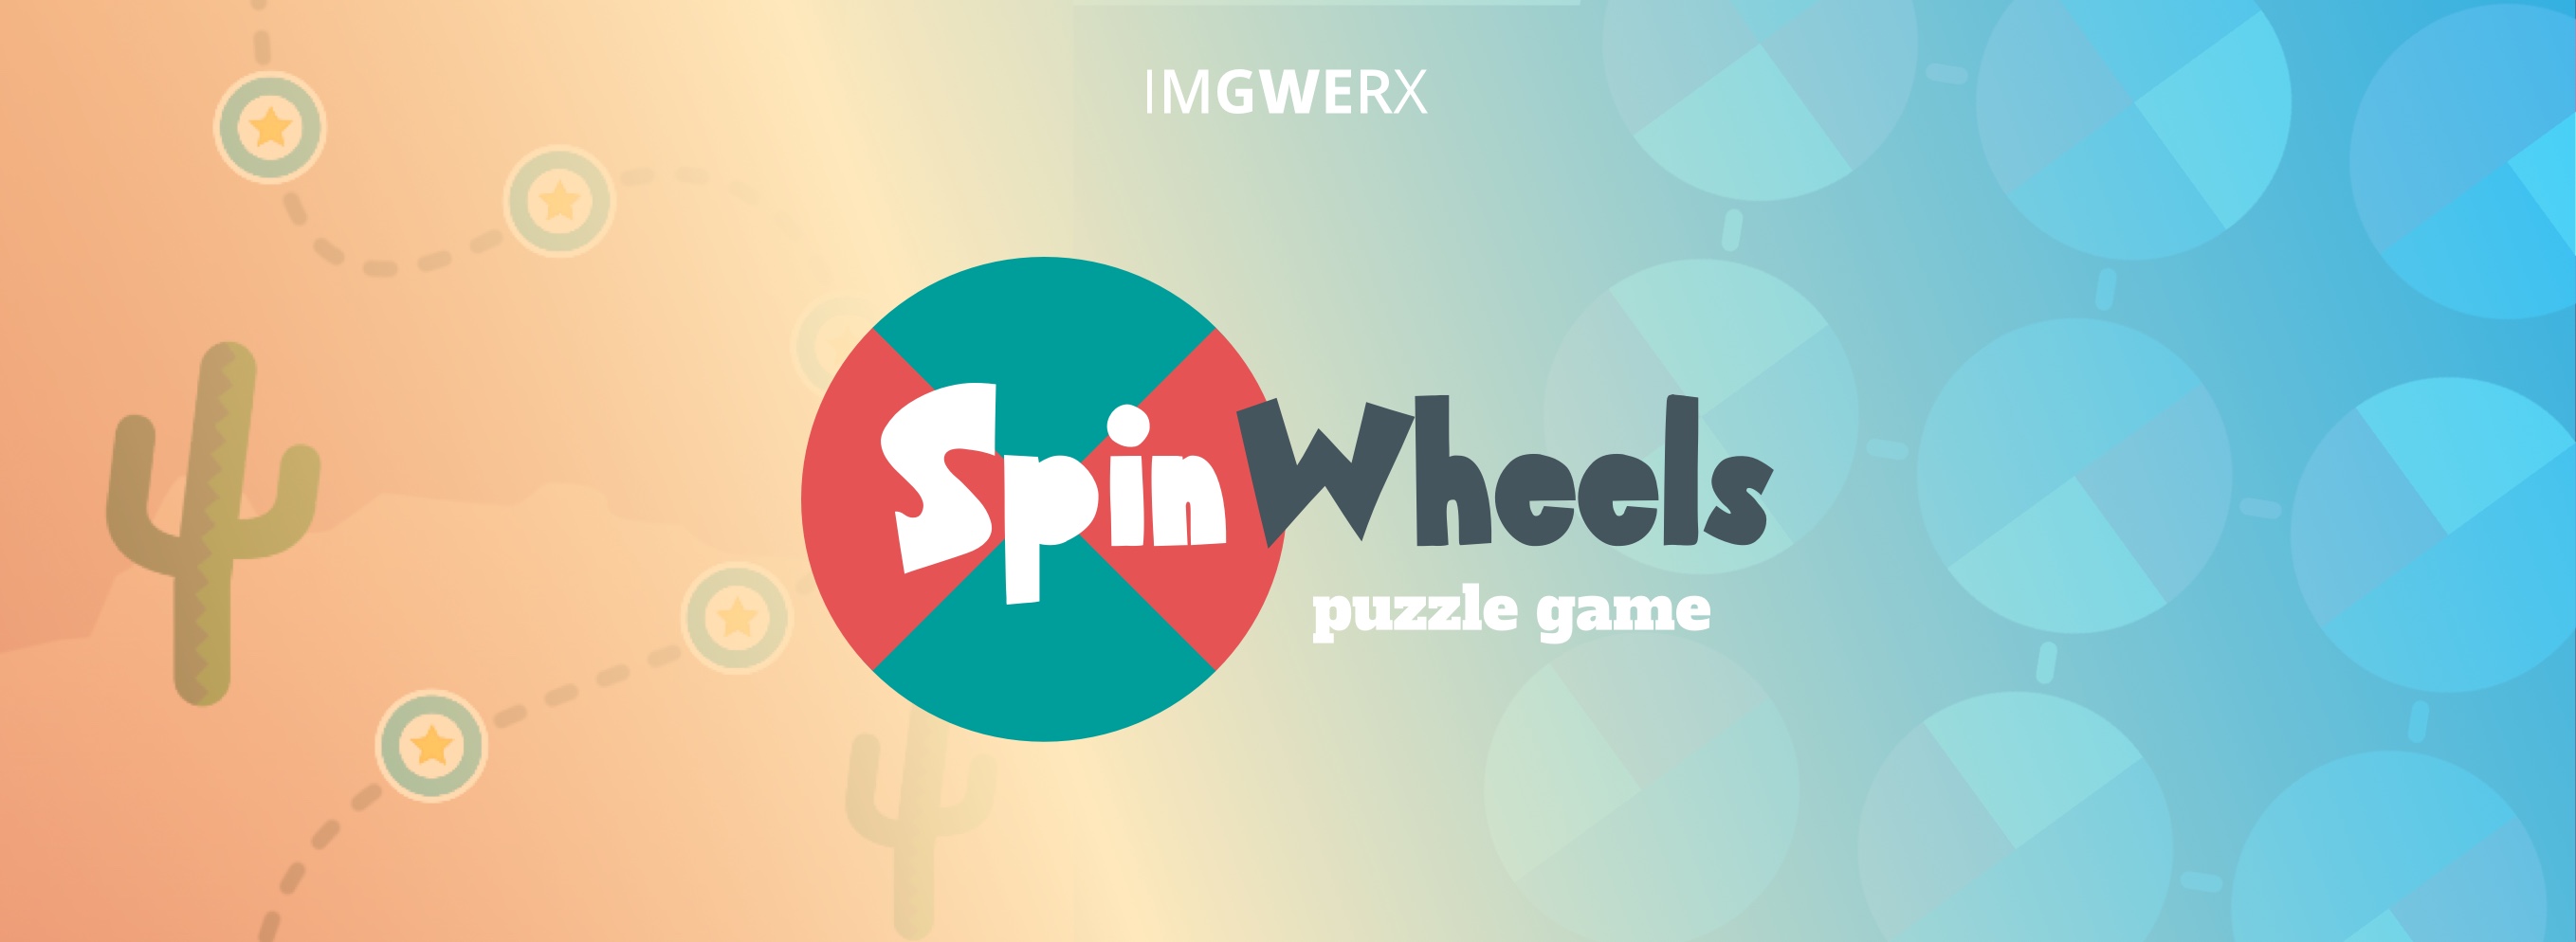 IMGWERX SpinWheels - Puzzle Game